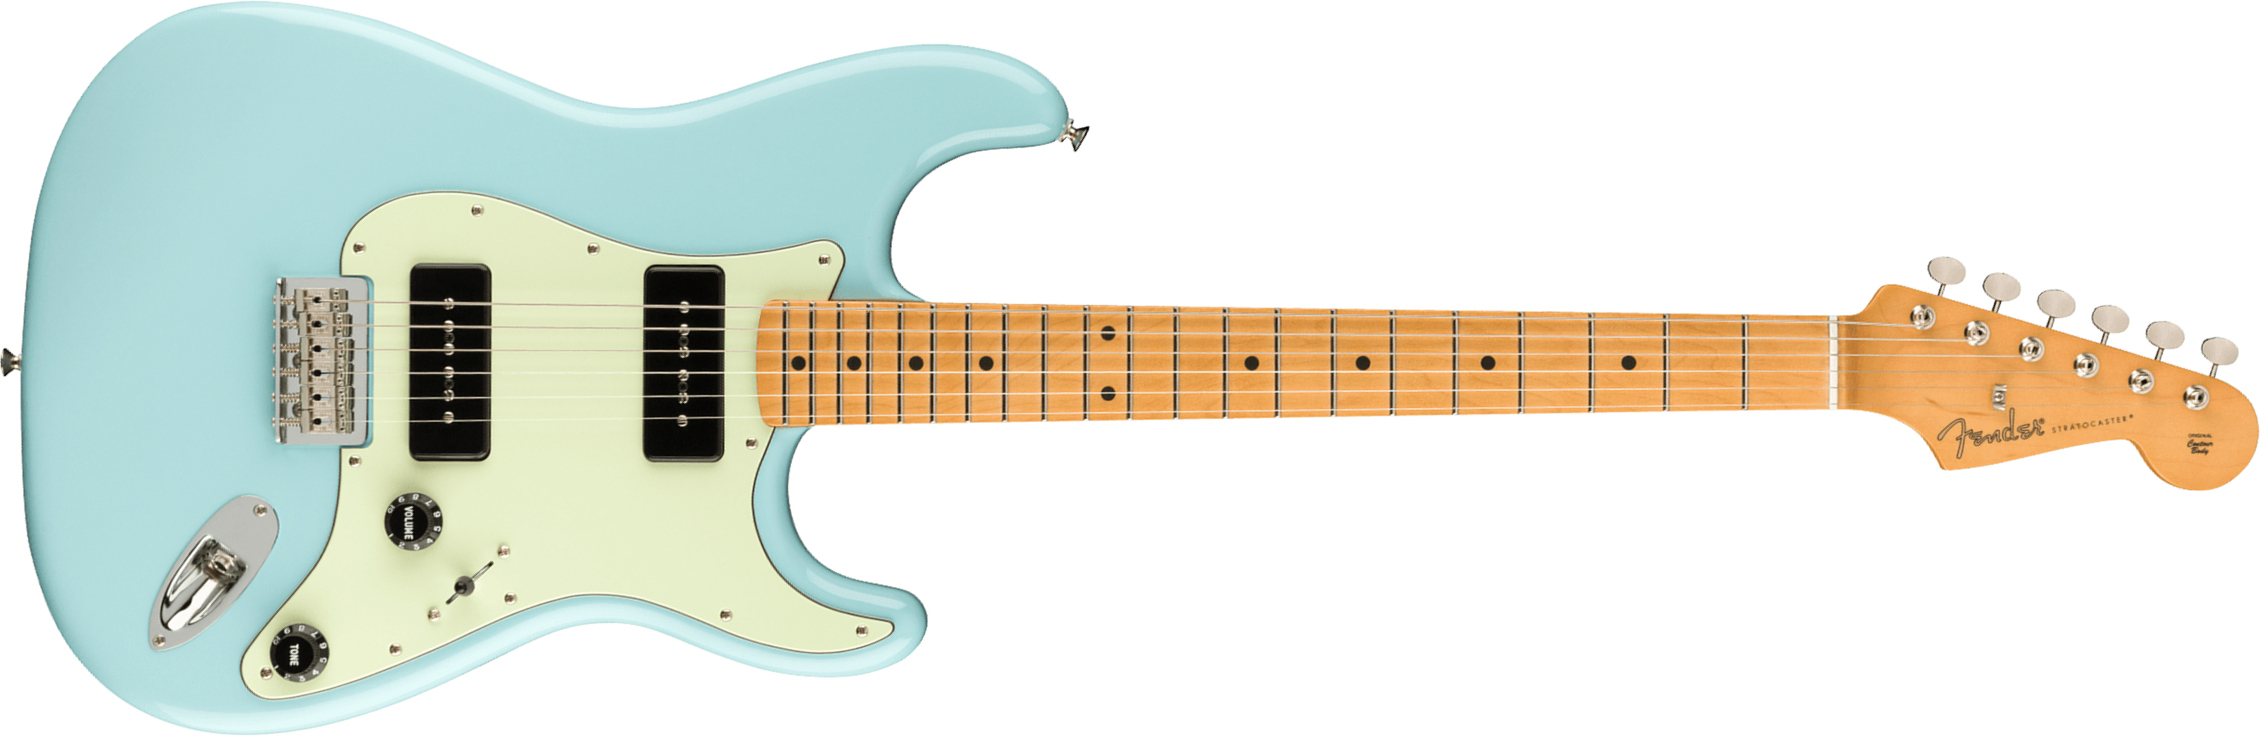 Fender Strat Noventa Mex Ss Ht Mn +housse - Daphne Blue - Str shape electric guitar - Main picture